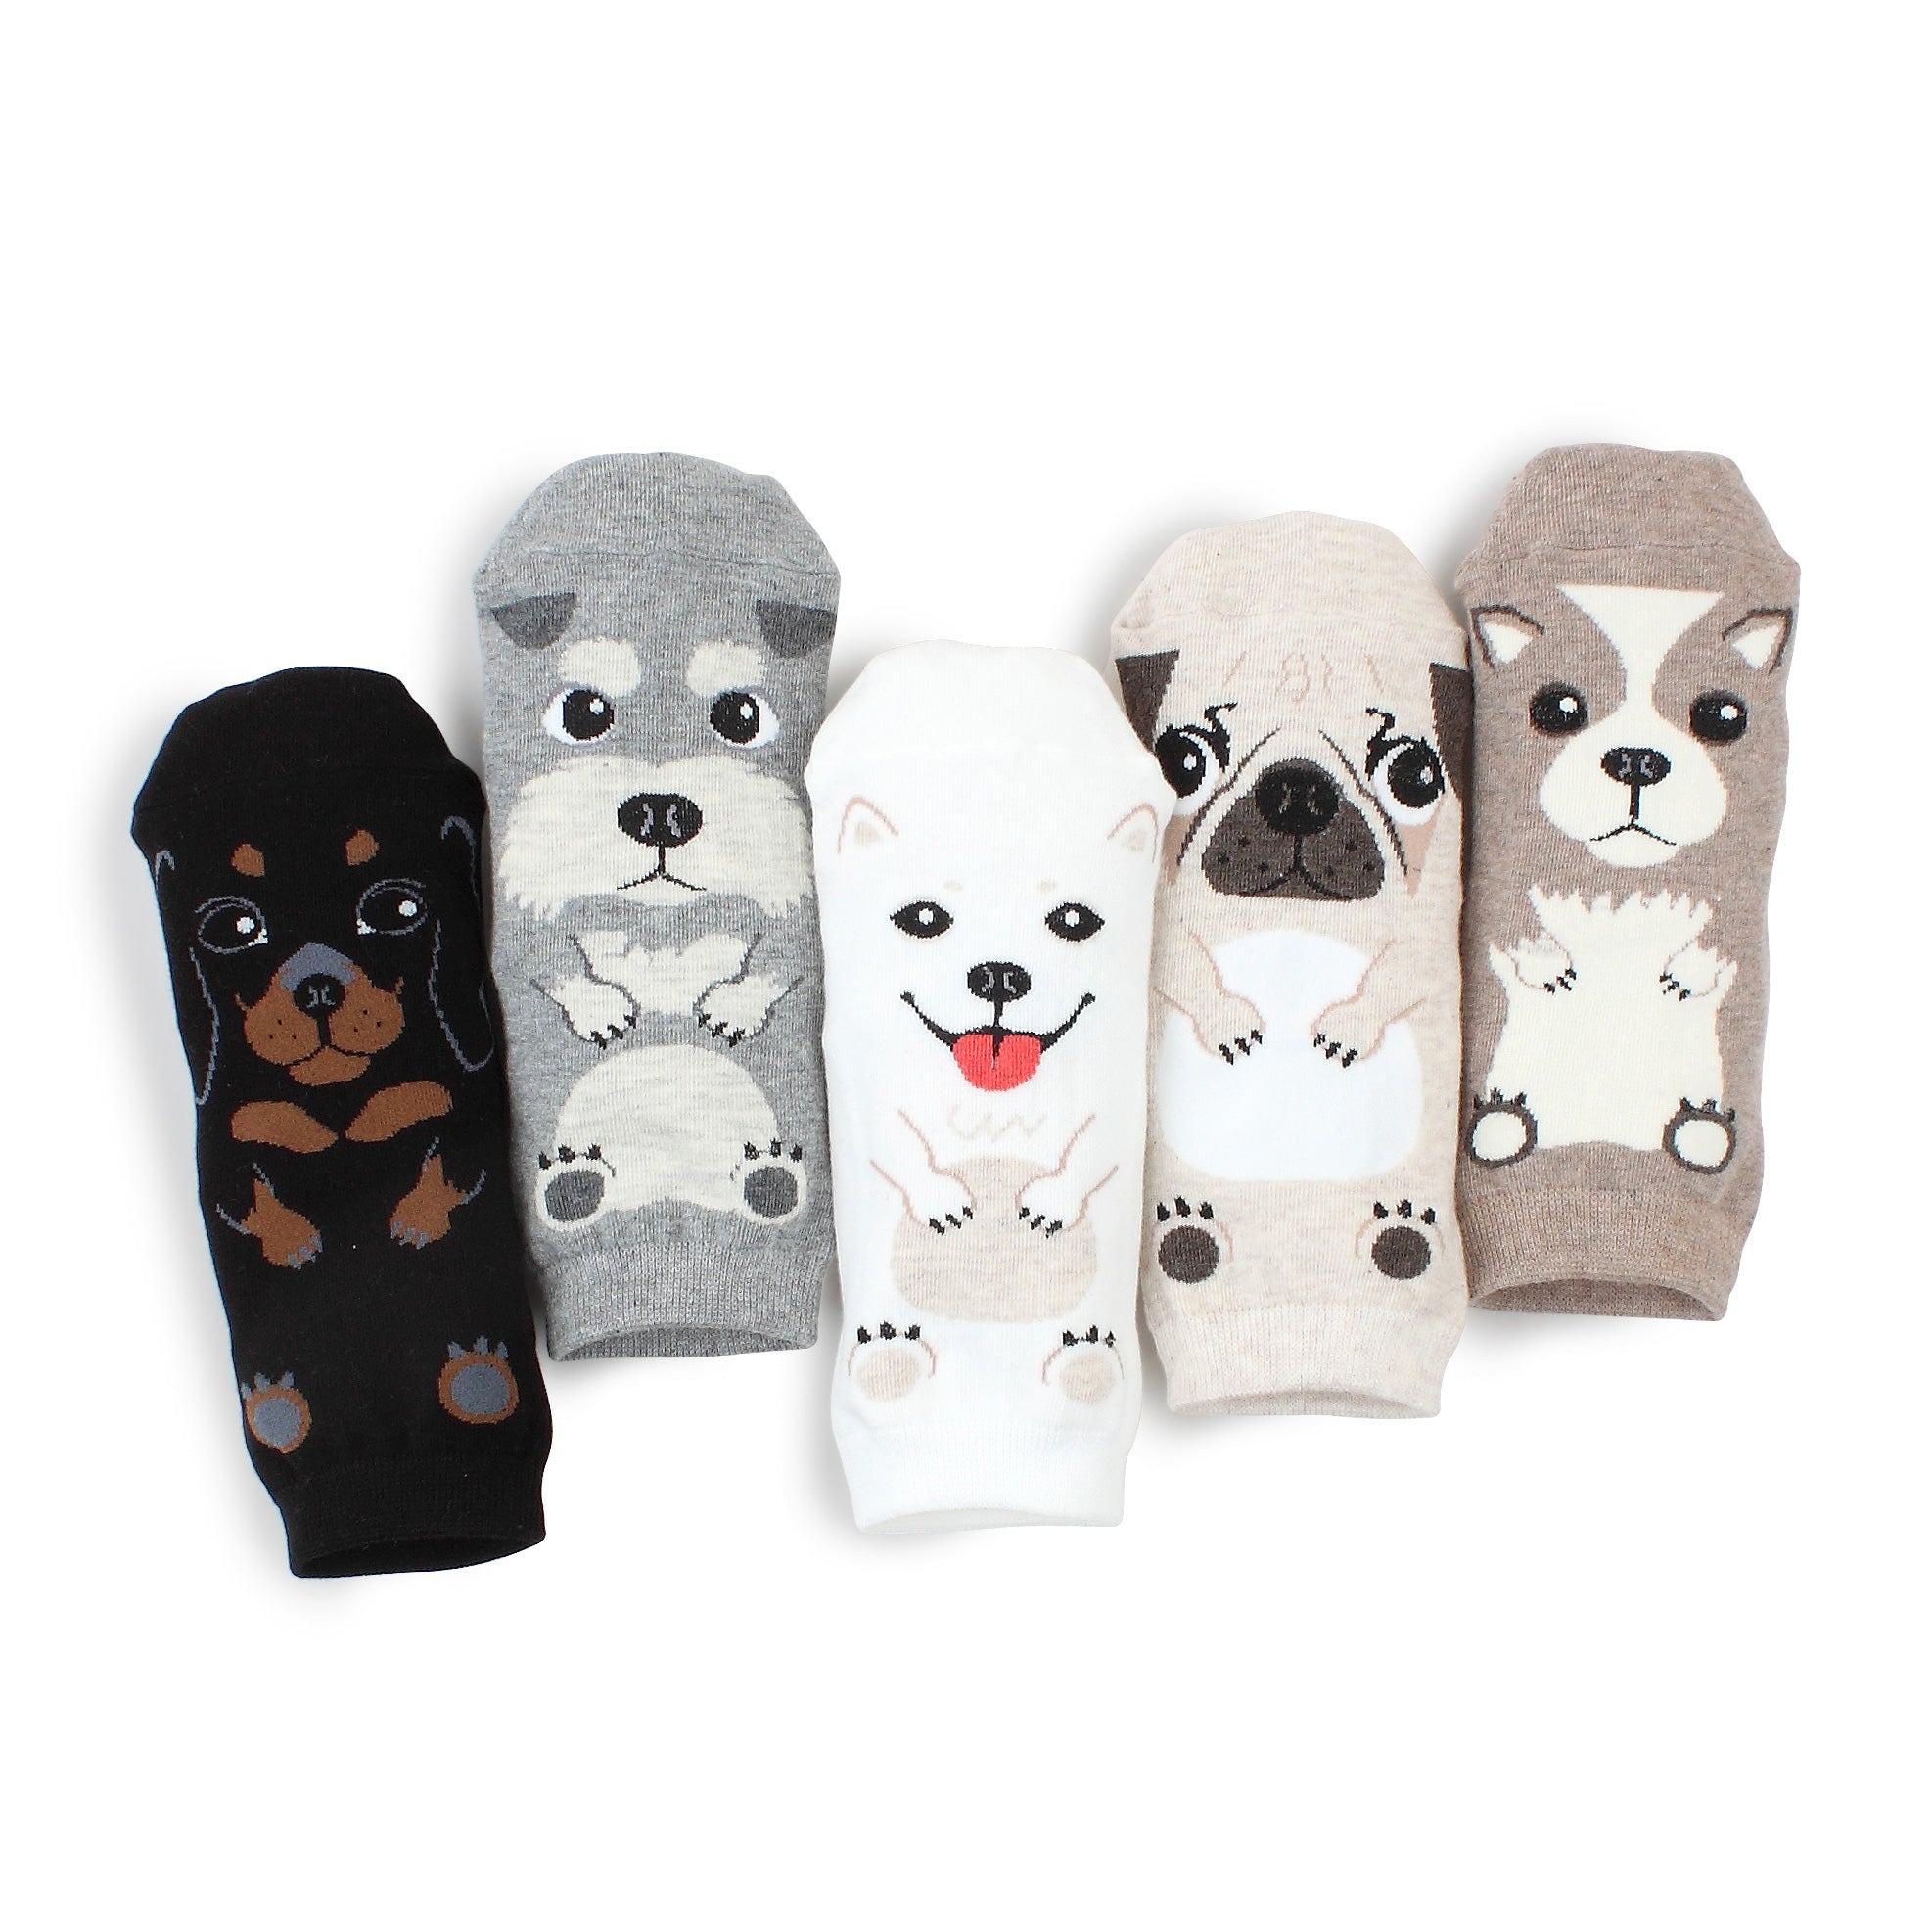 (5 pairs) Women's Puppy Face Socks WH15 - intypesocks